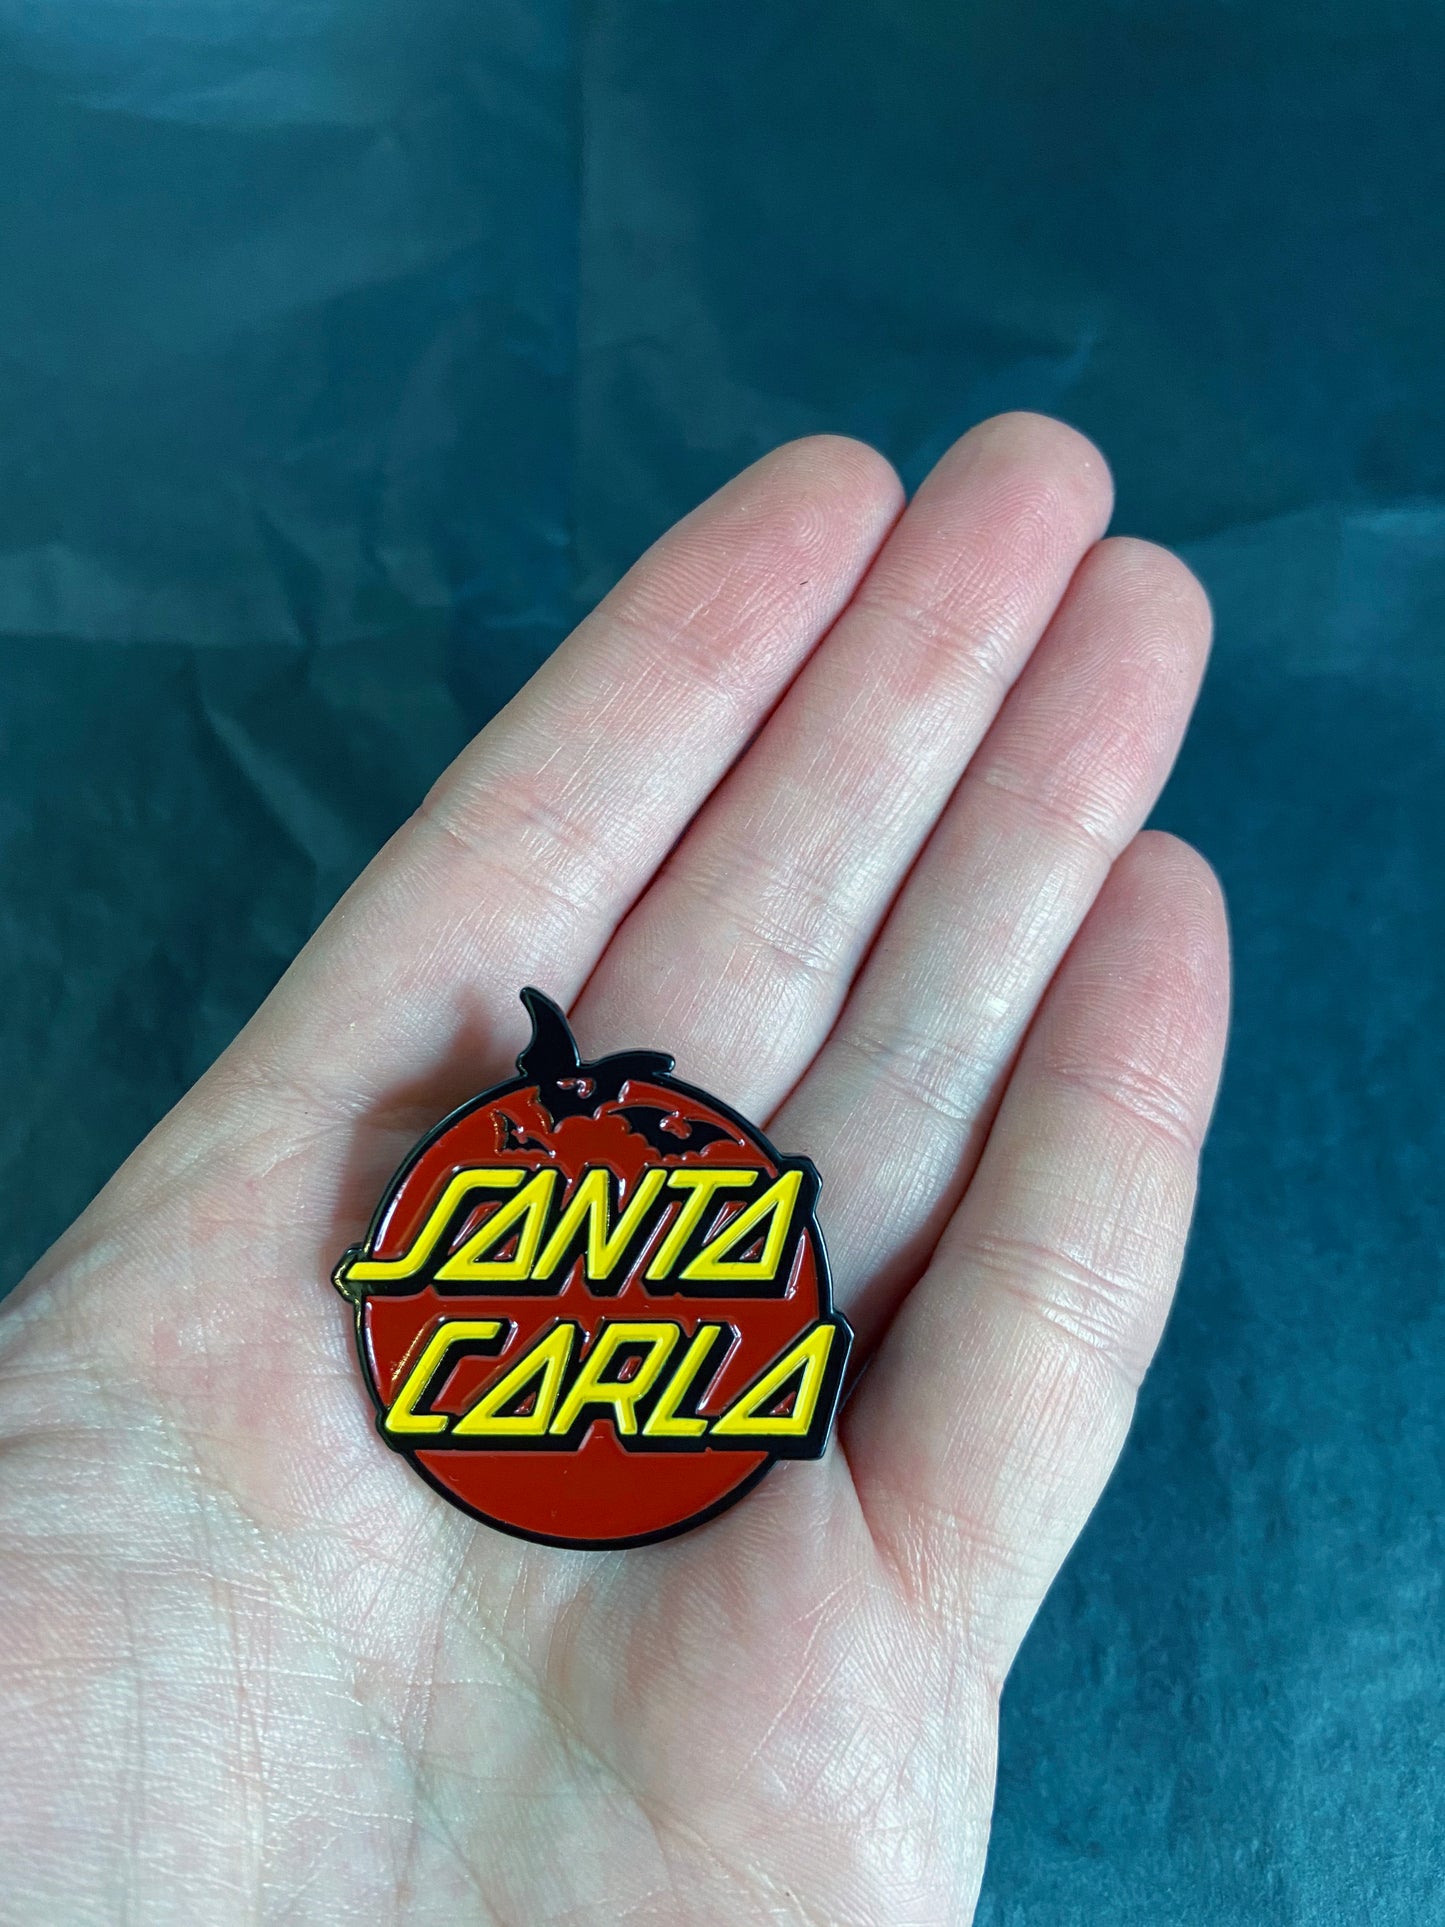 Santa Carla Vampire (lost boys HORROR inspired) pin BADGE